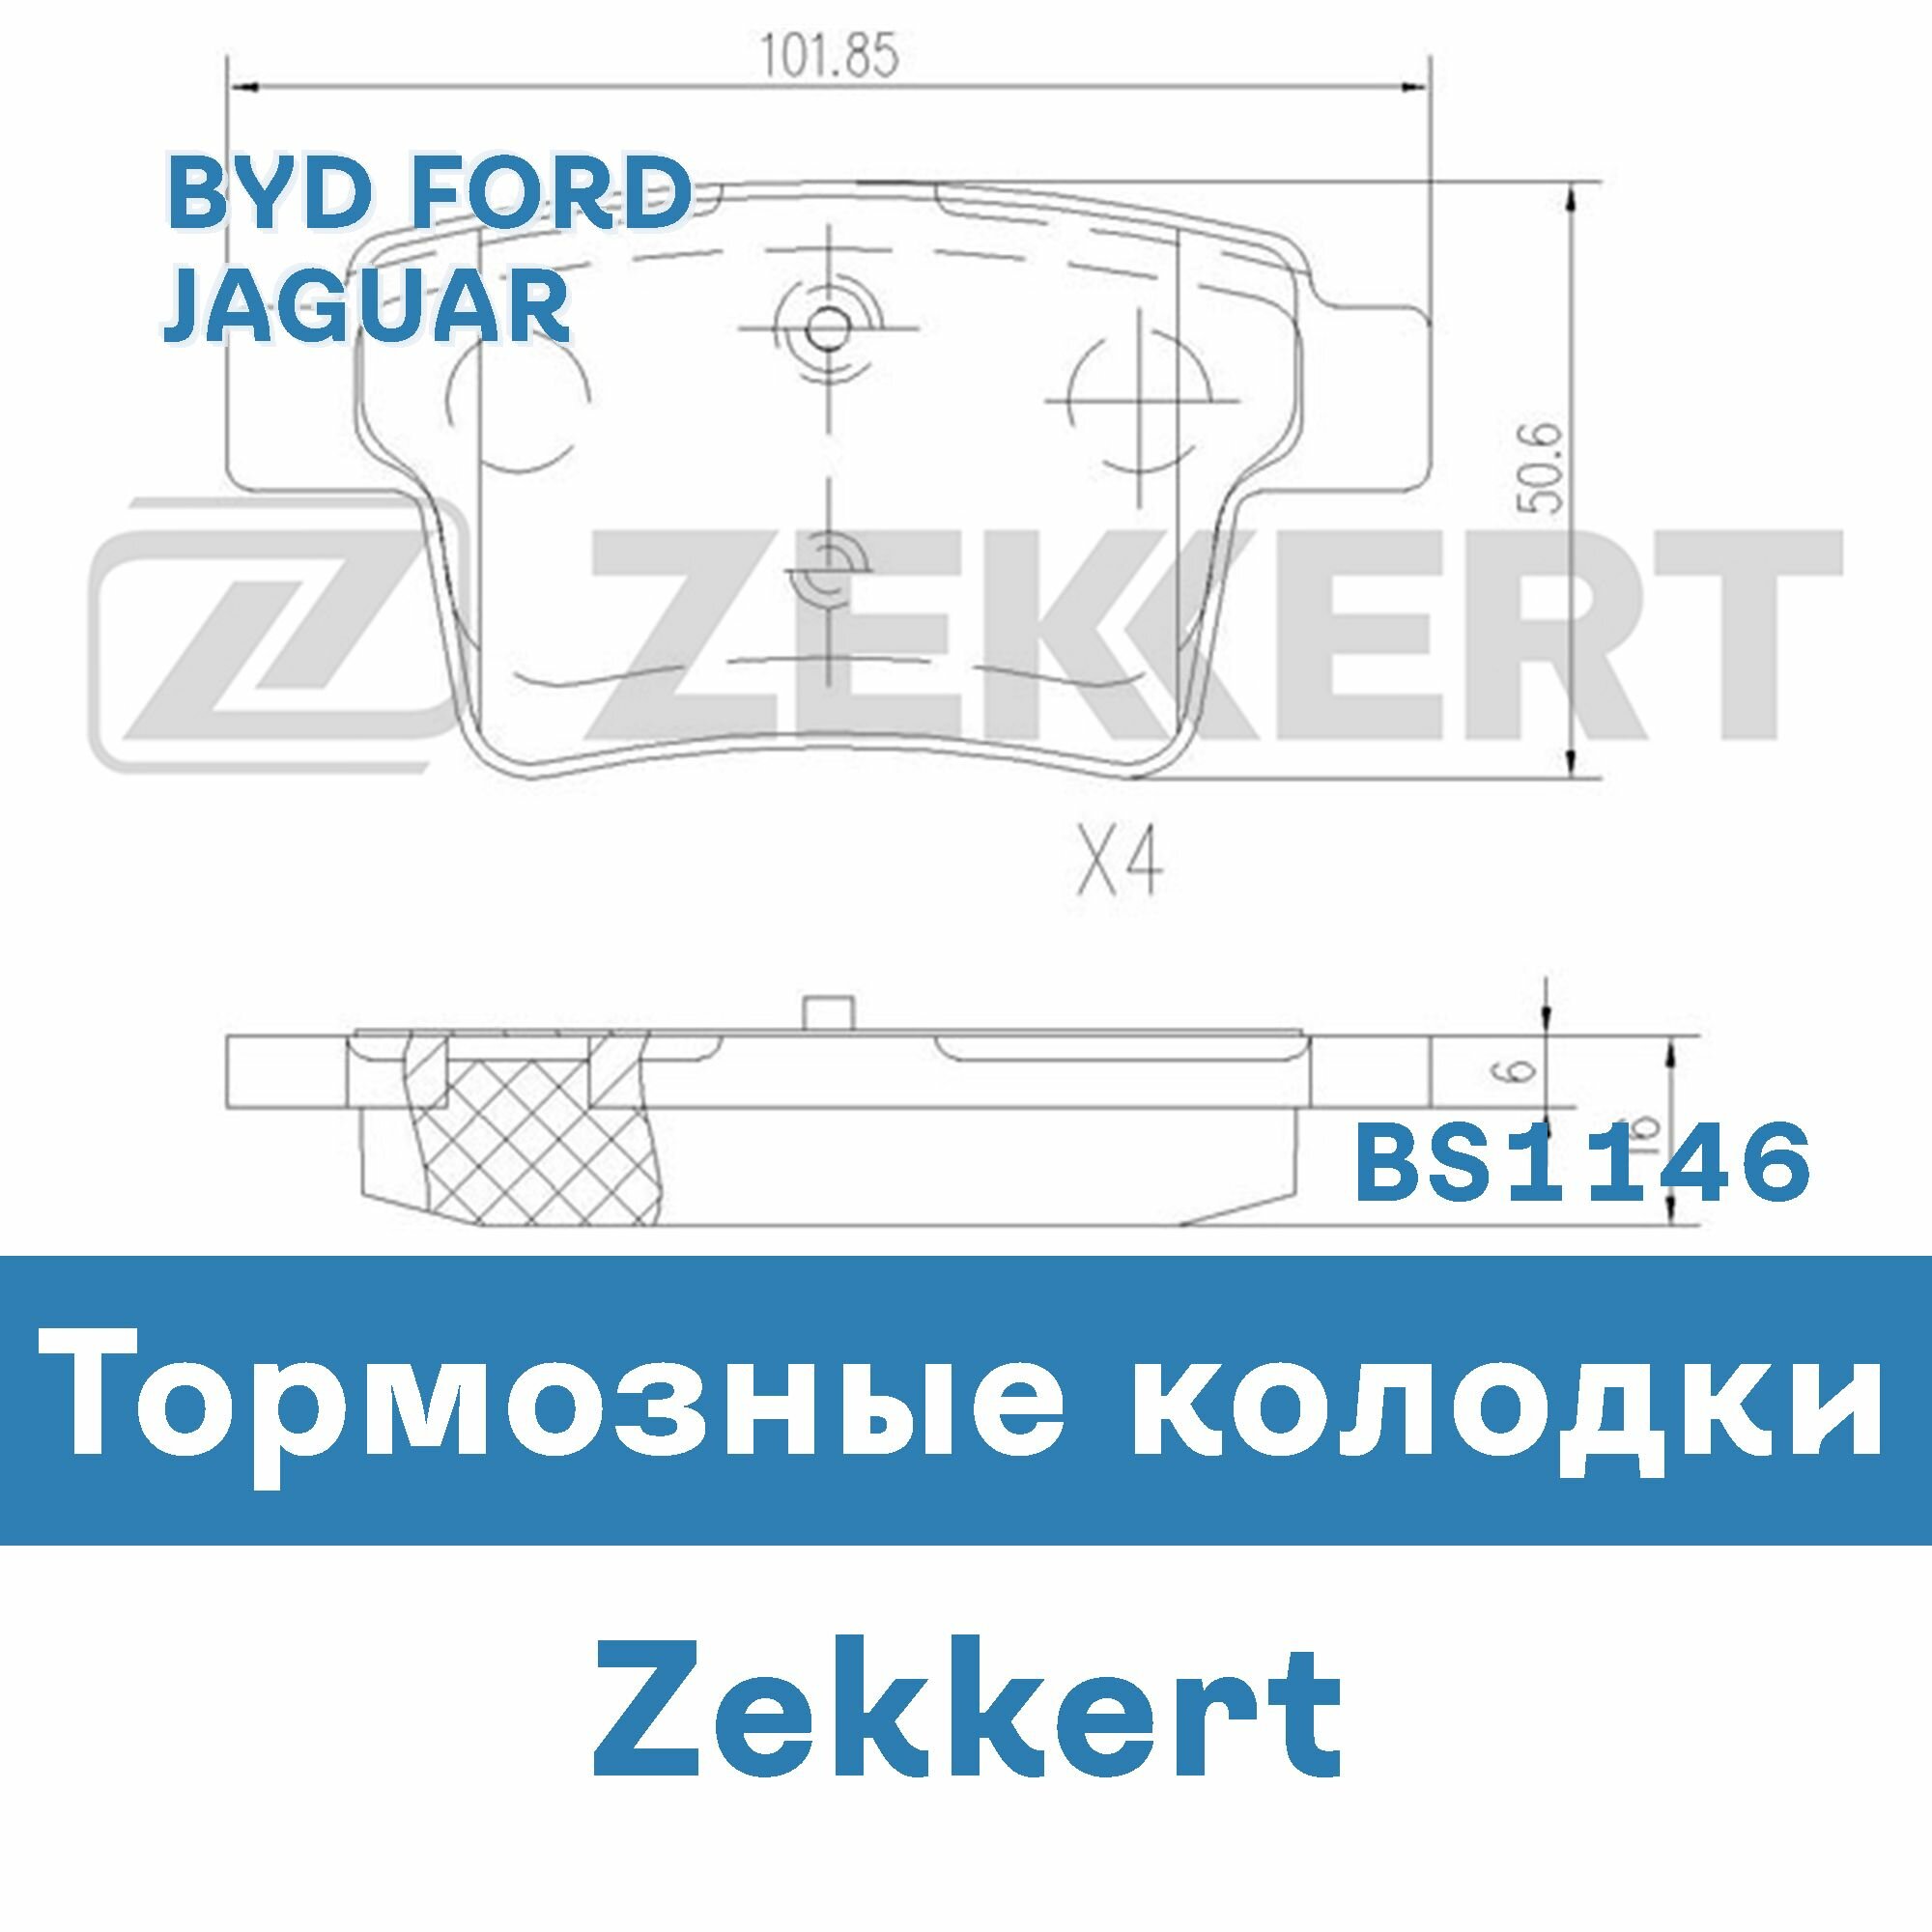 Тормозные колодки для BYD, FORD, JAGUAR BS1146 ZEKKERT